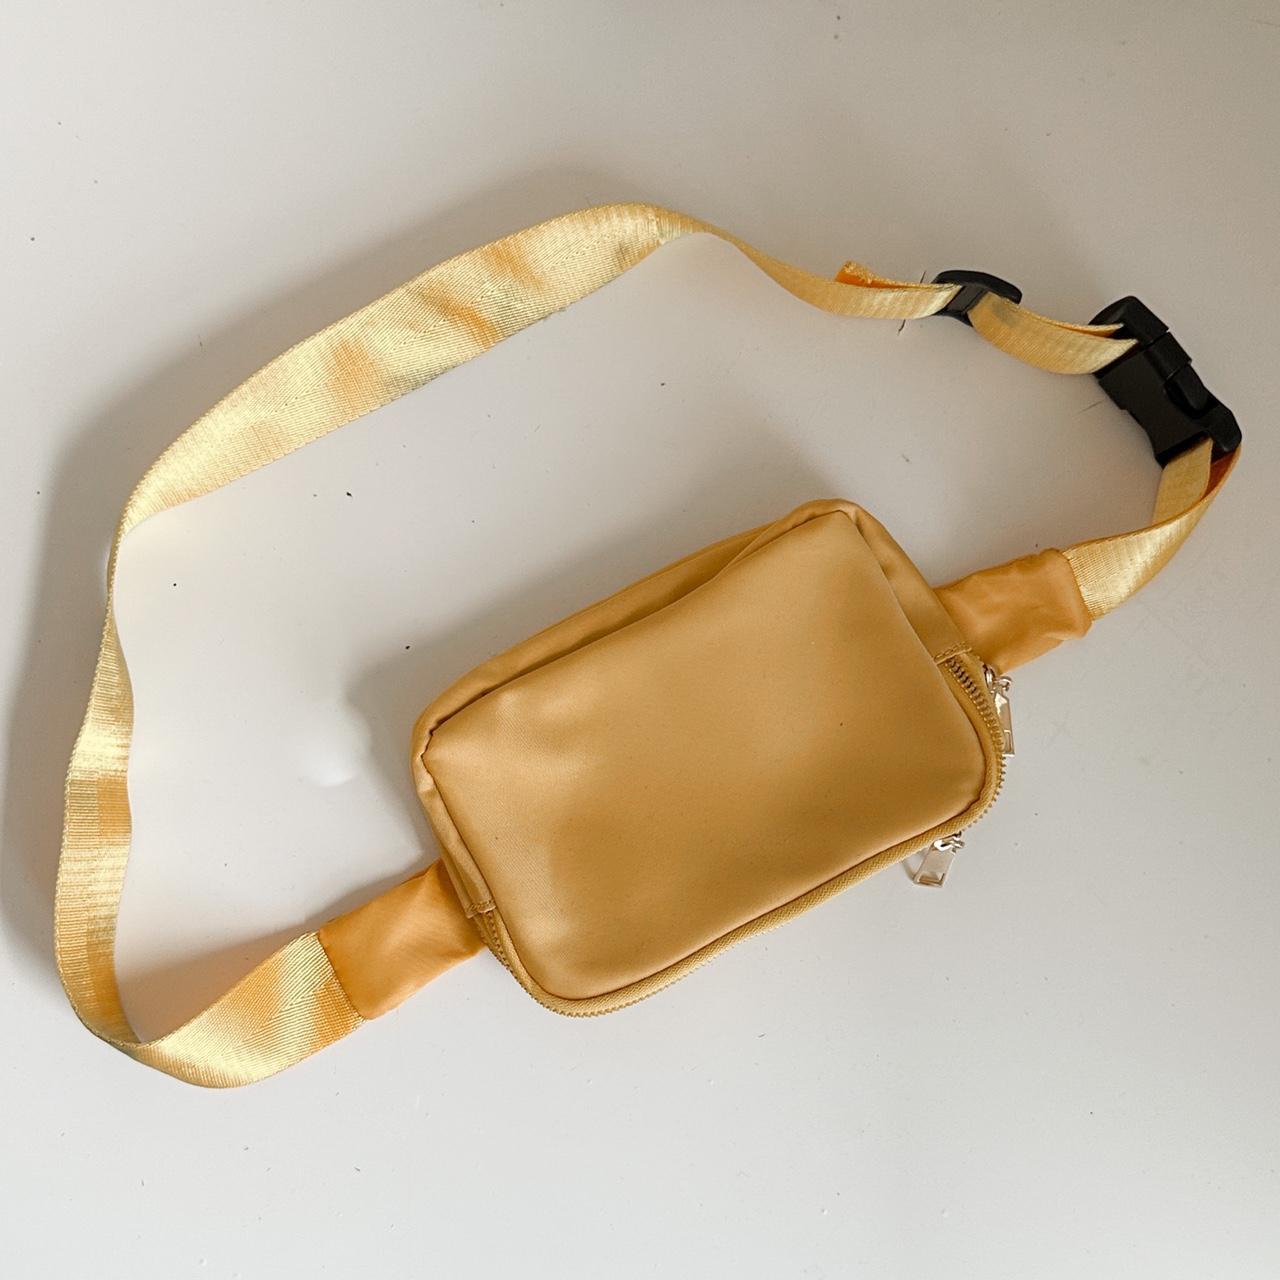 Amazon mustard yellow belt bag - some denim transfer - Depop